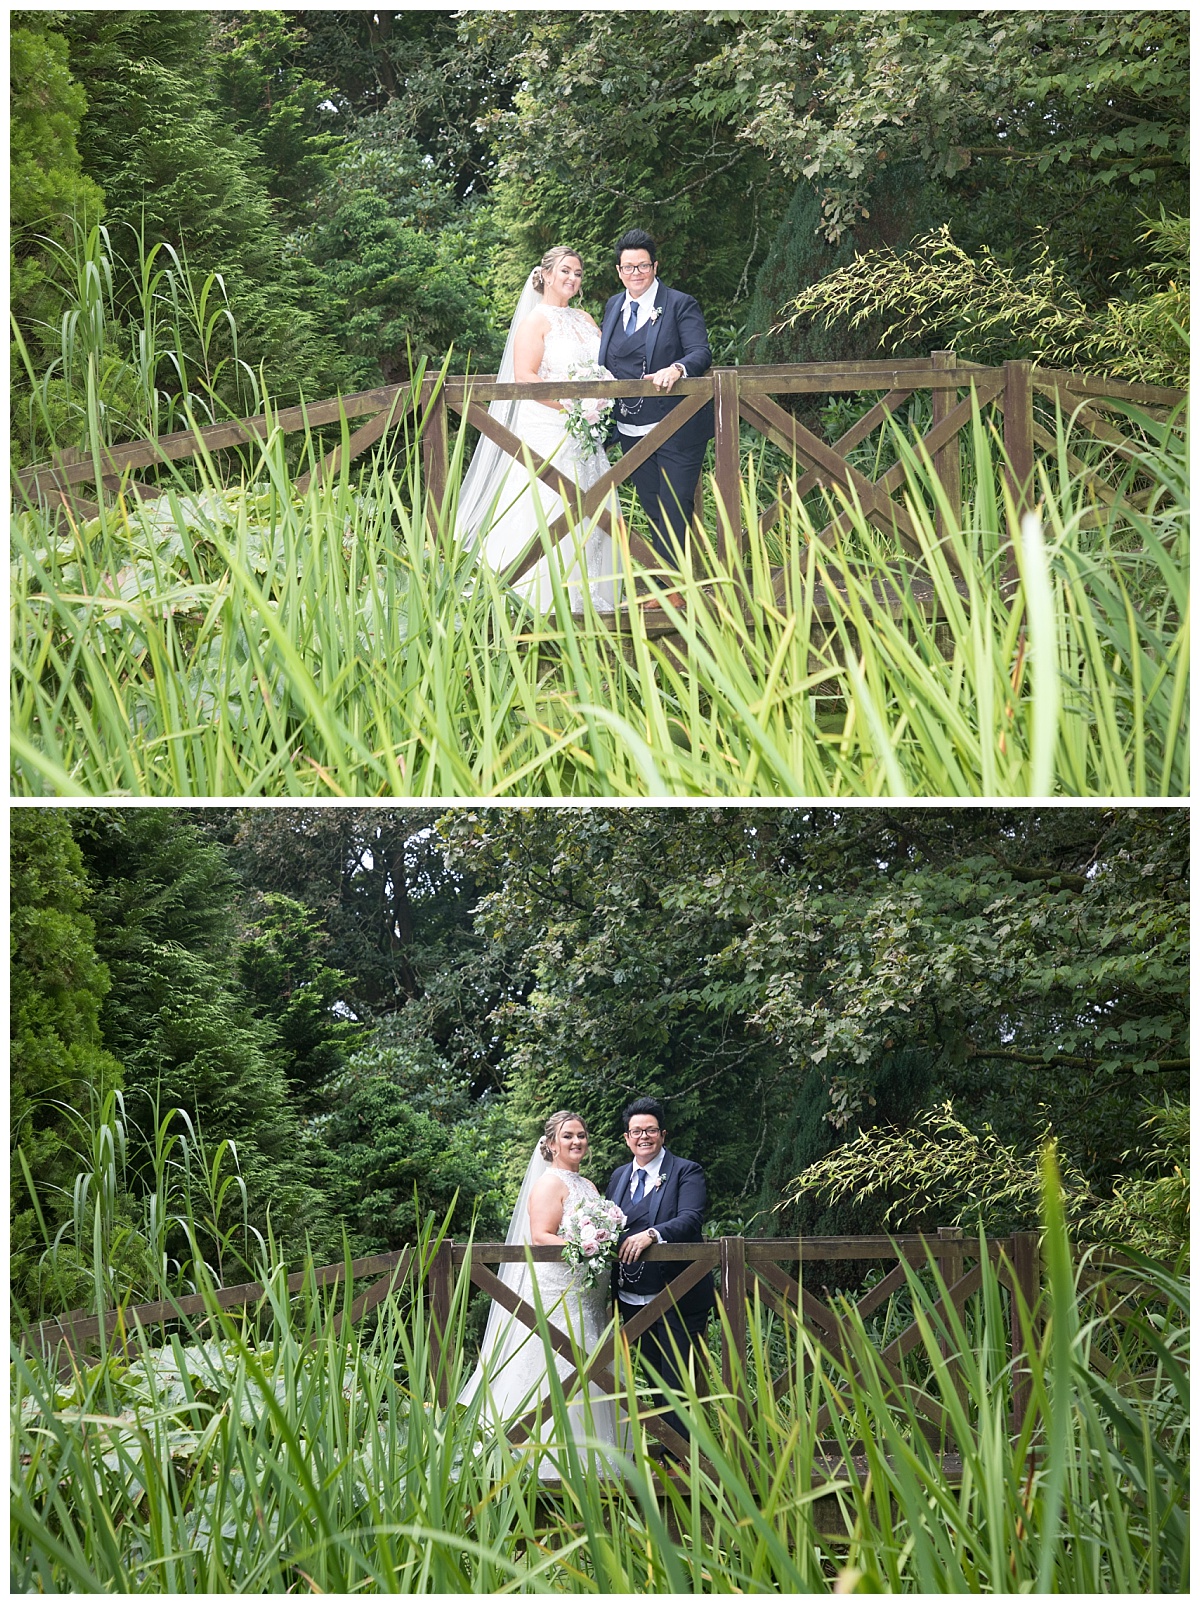 Wedding Photography Manchester - Nicky and Nichola's Nunsmere Hall Wedding Day 71